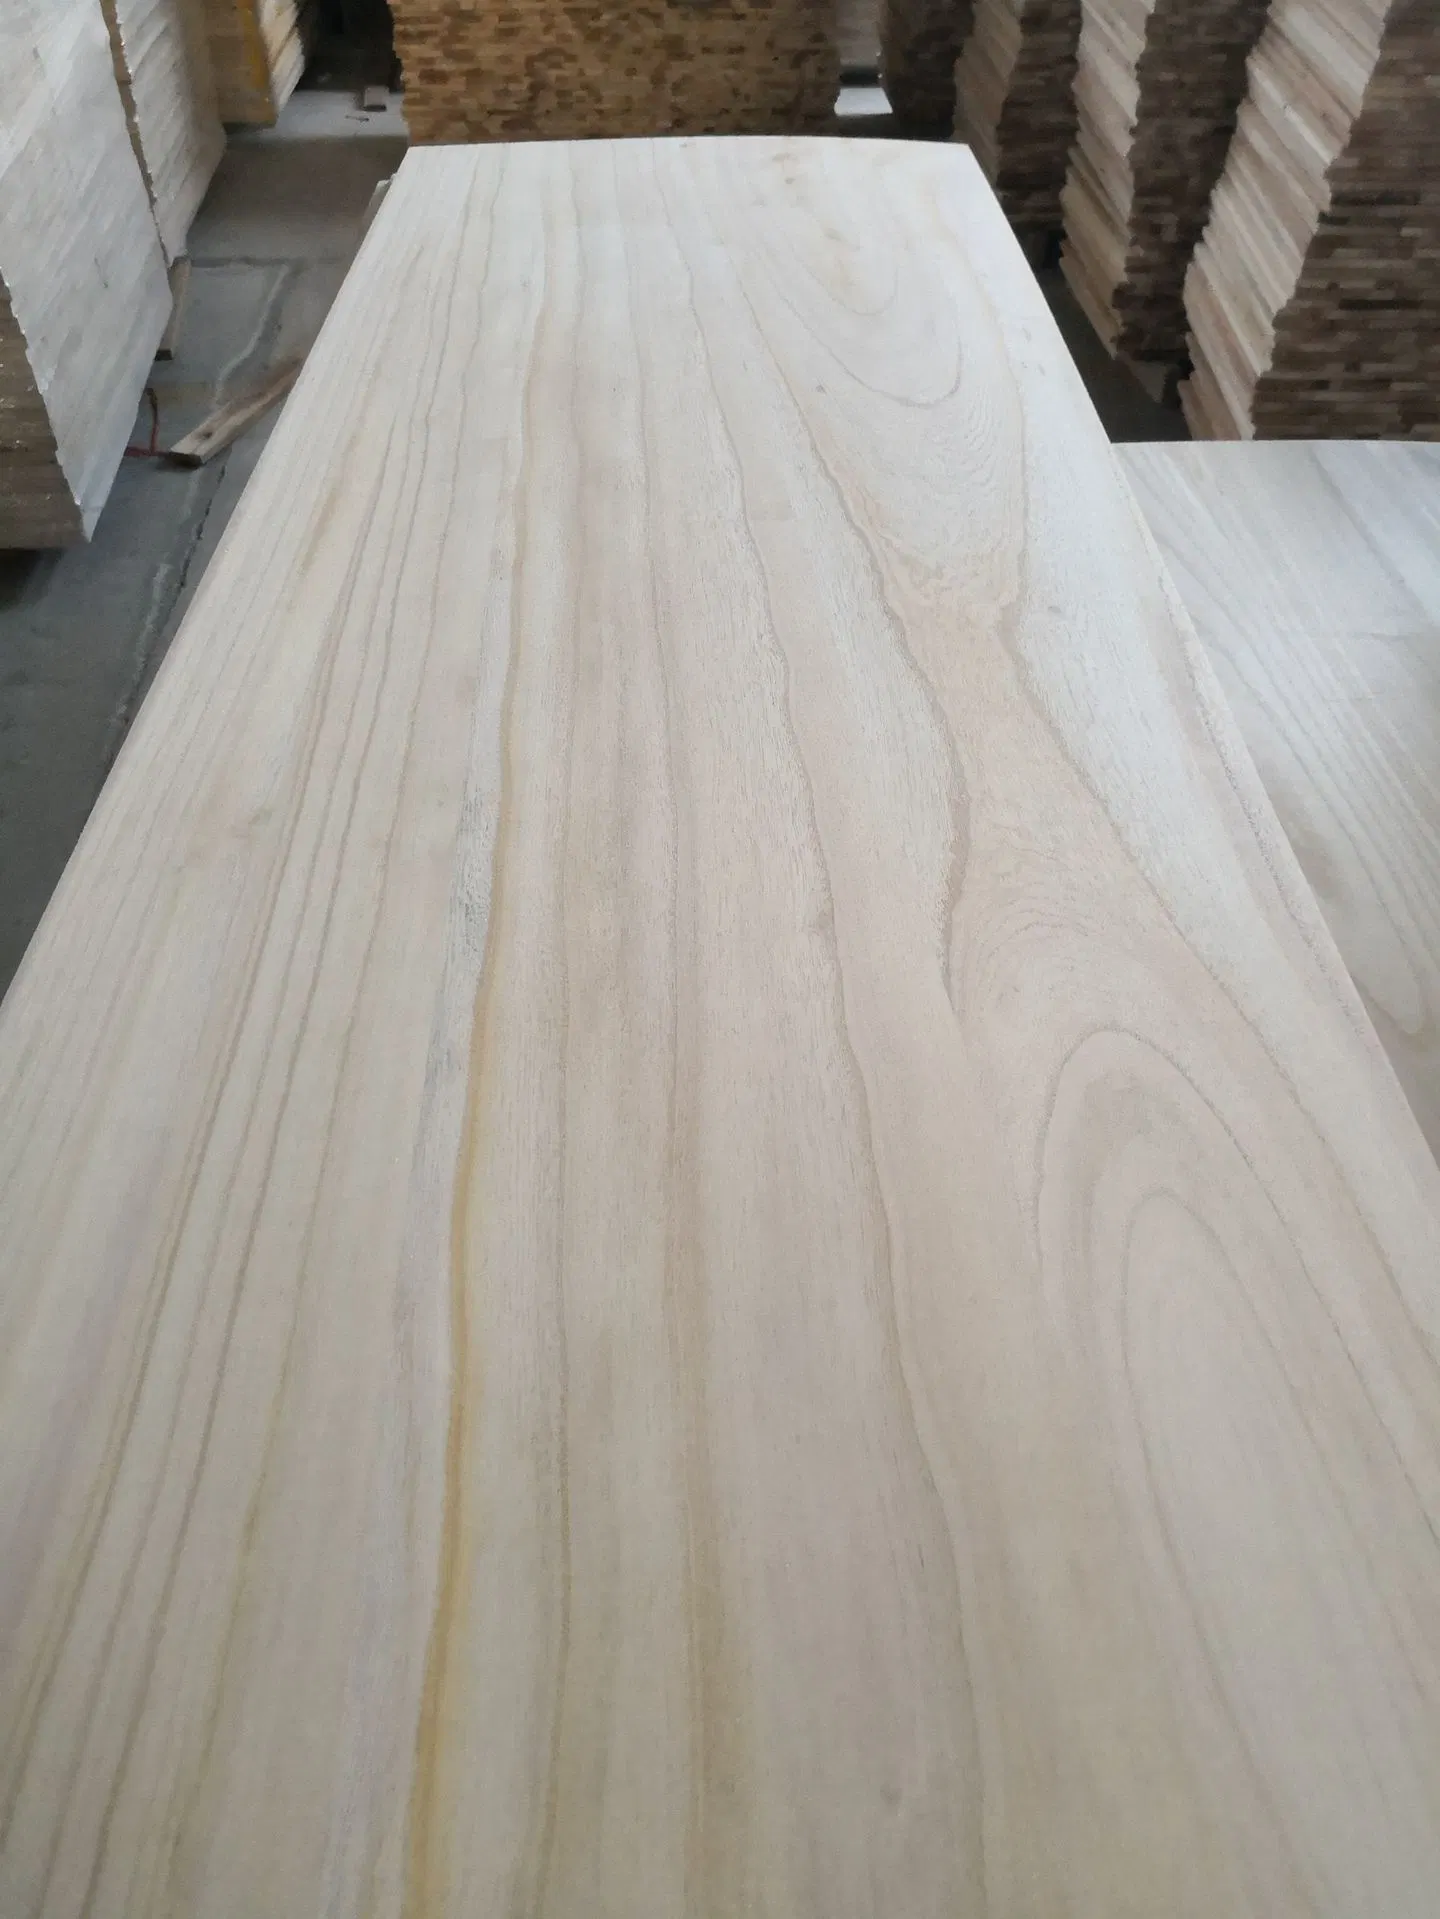 Paulownia Wood Solid Wood Wood Price Wood Surfboard Closet Balsa Wood Paulownia Wood Solid Wood Wood